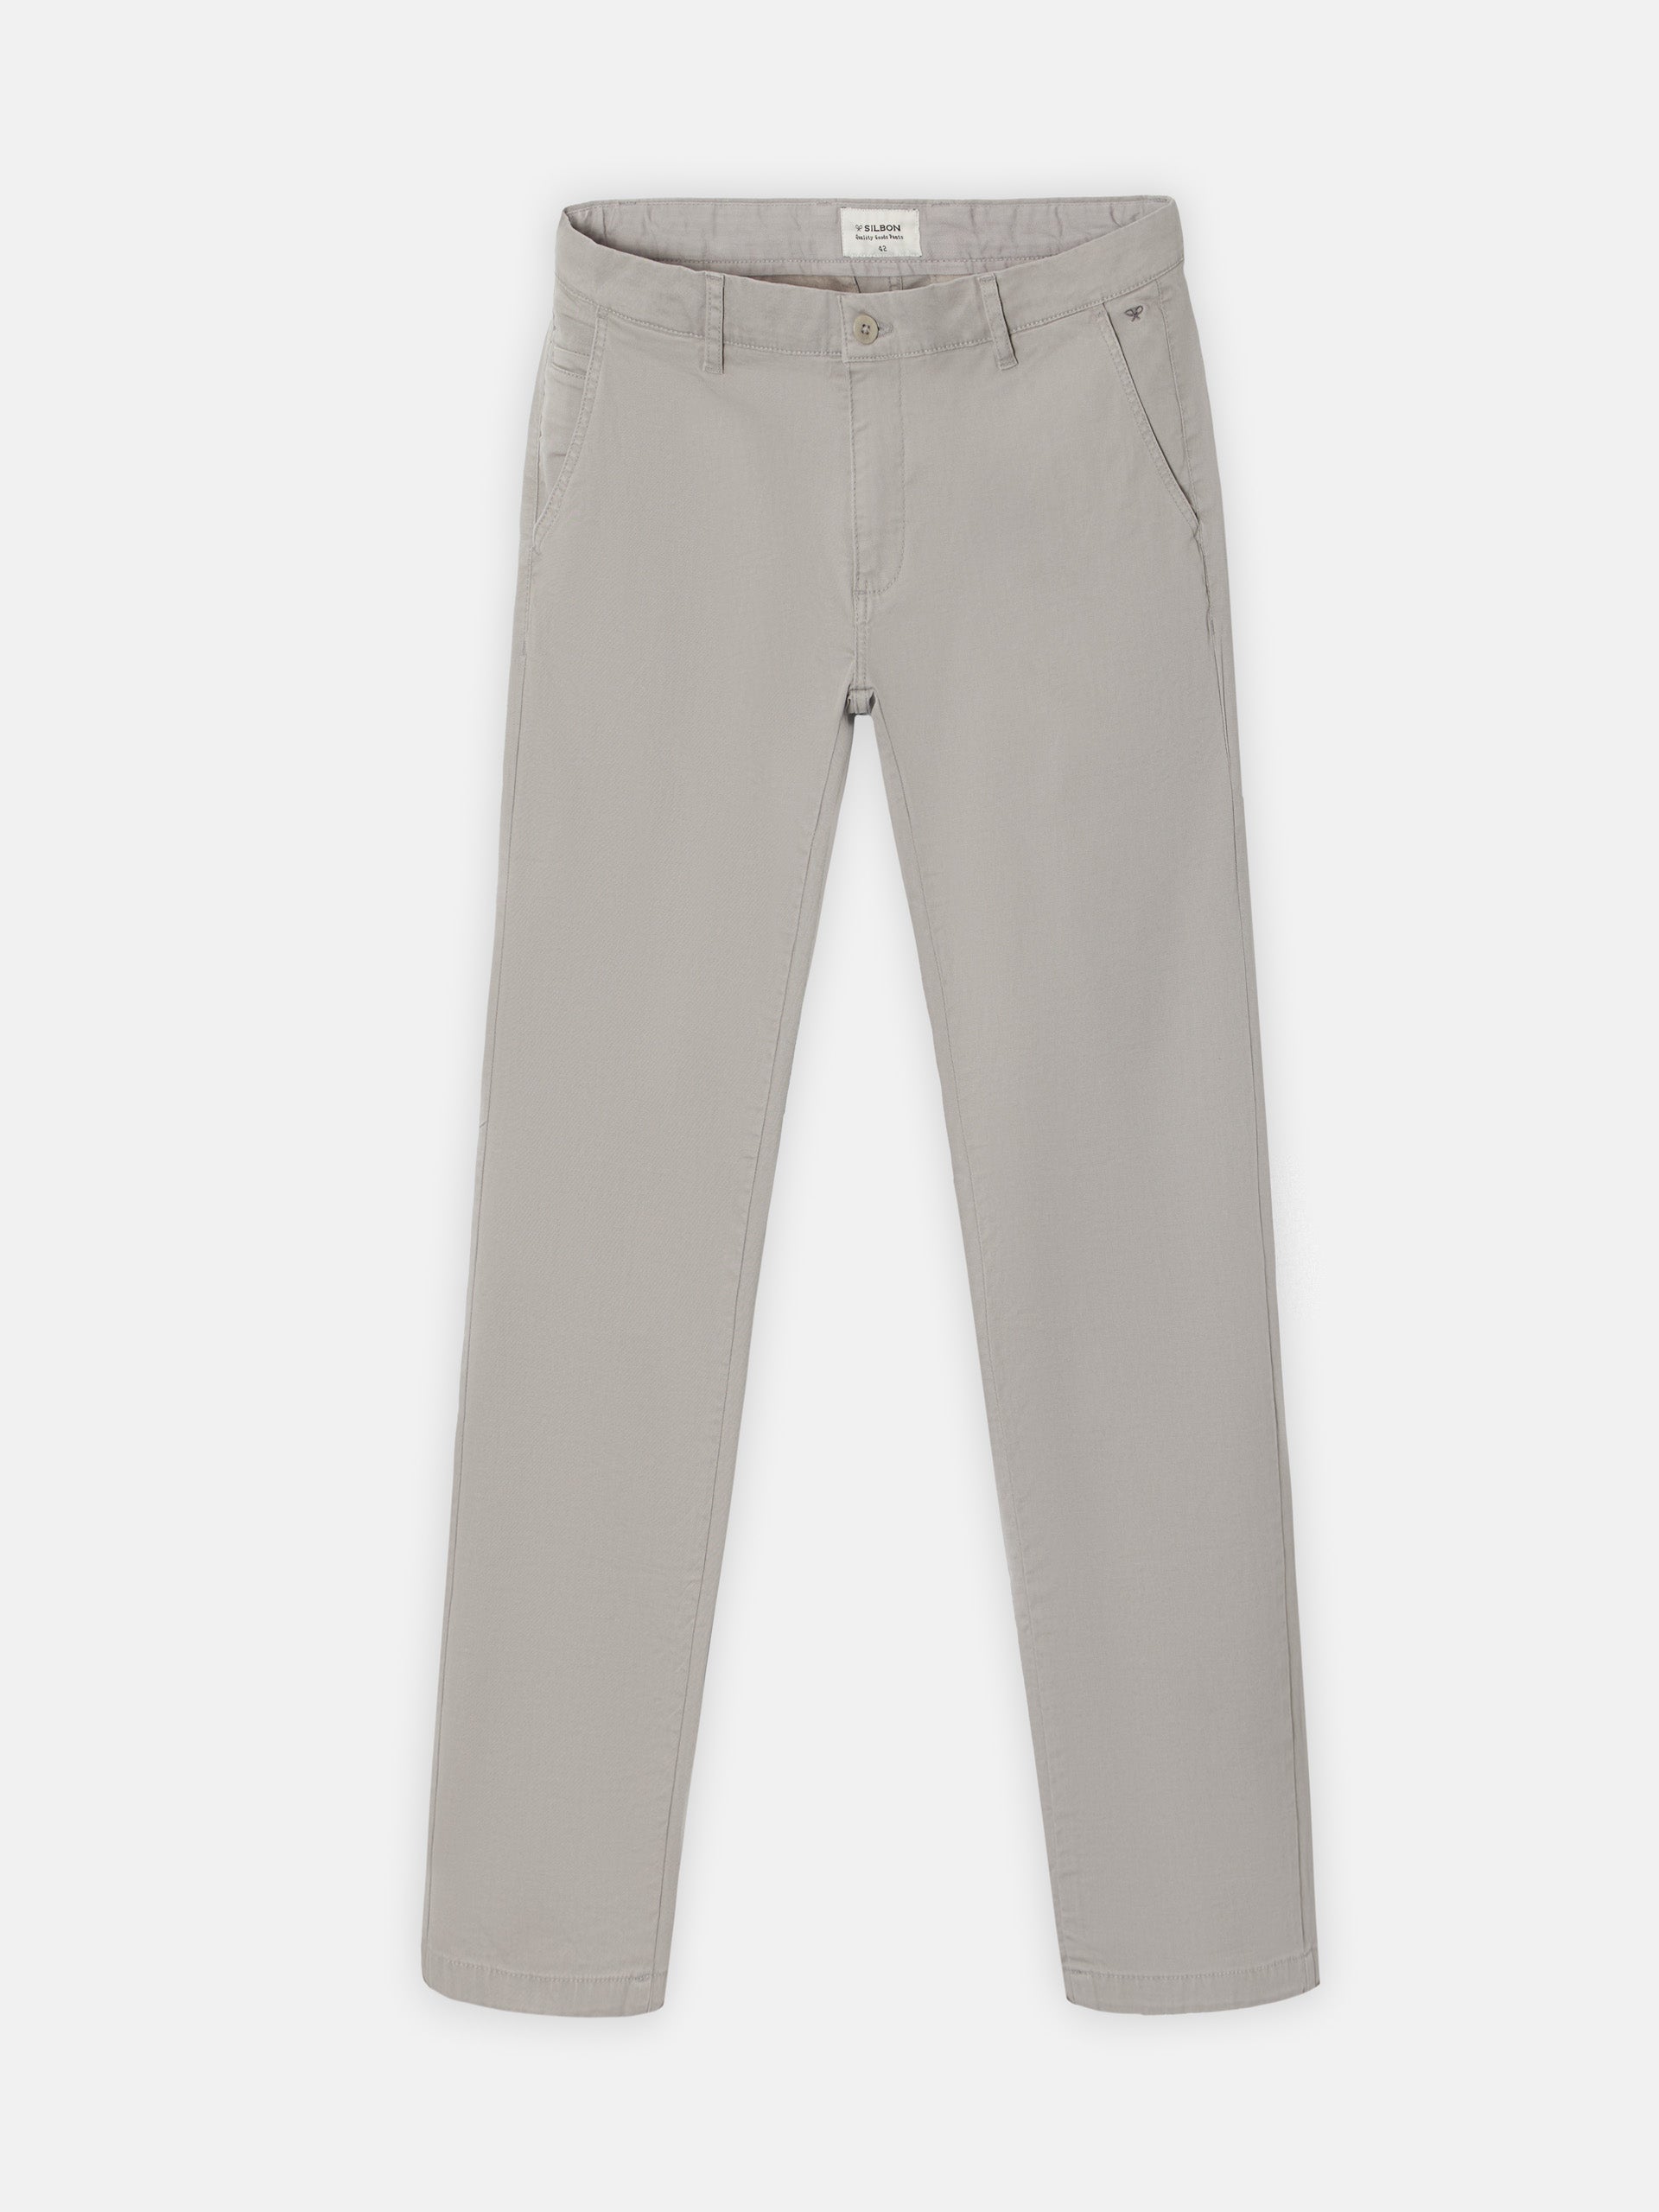 Pantalon sport chino gris